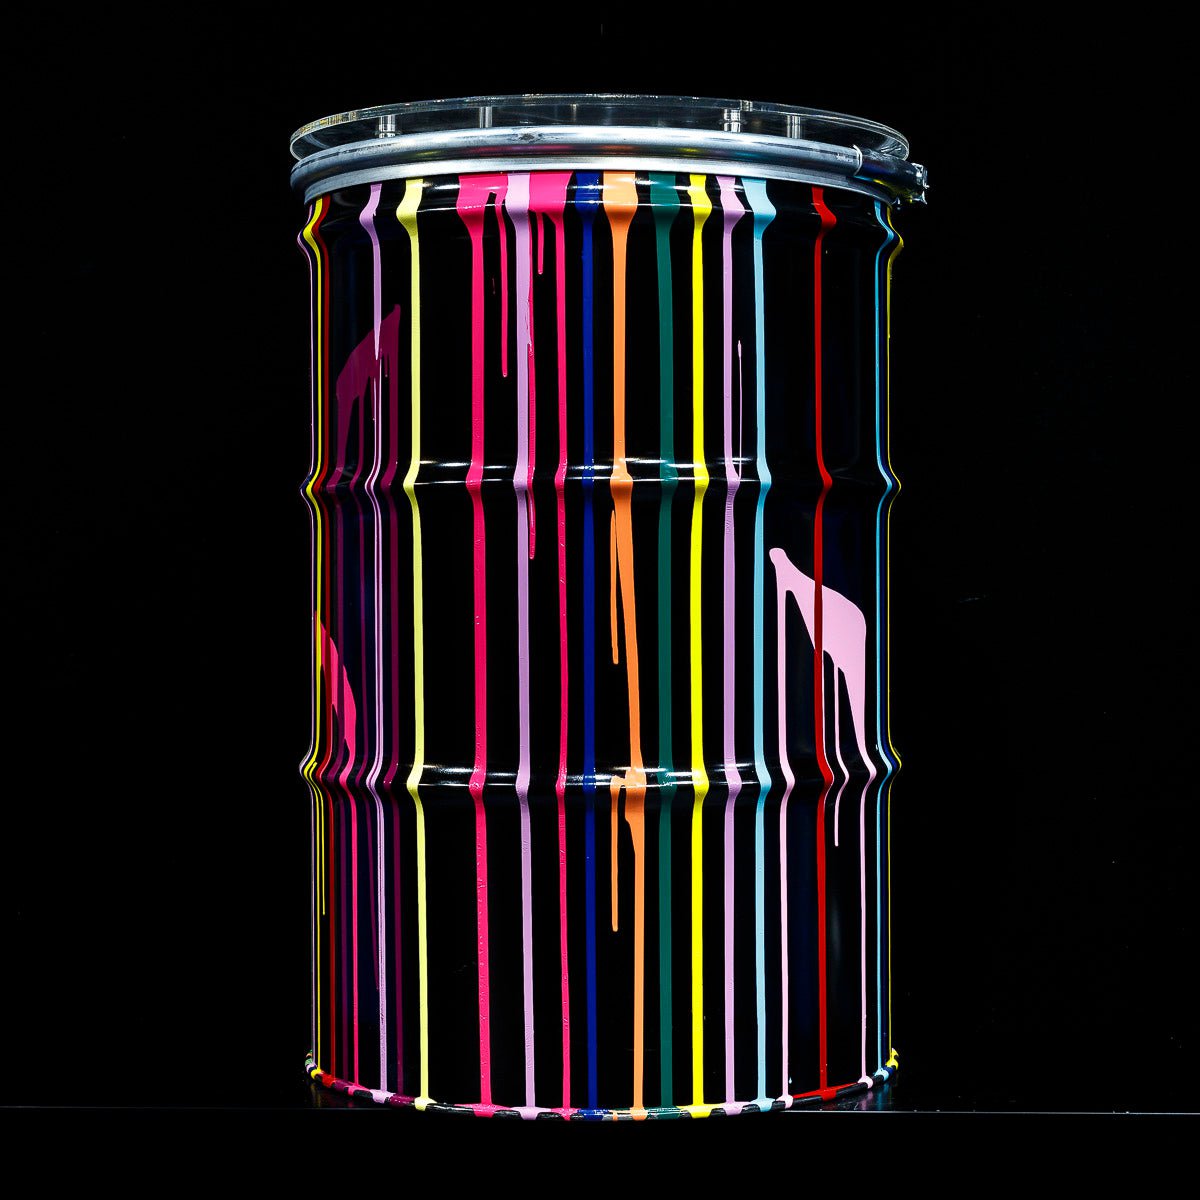 Paint Tin IV - Original Lhouette Original